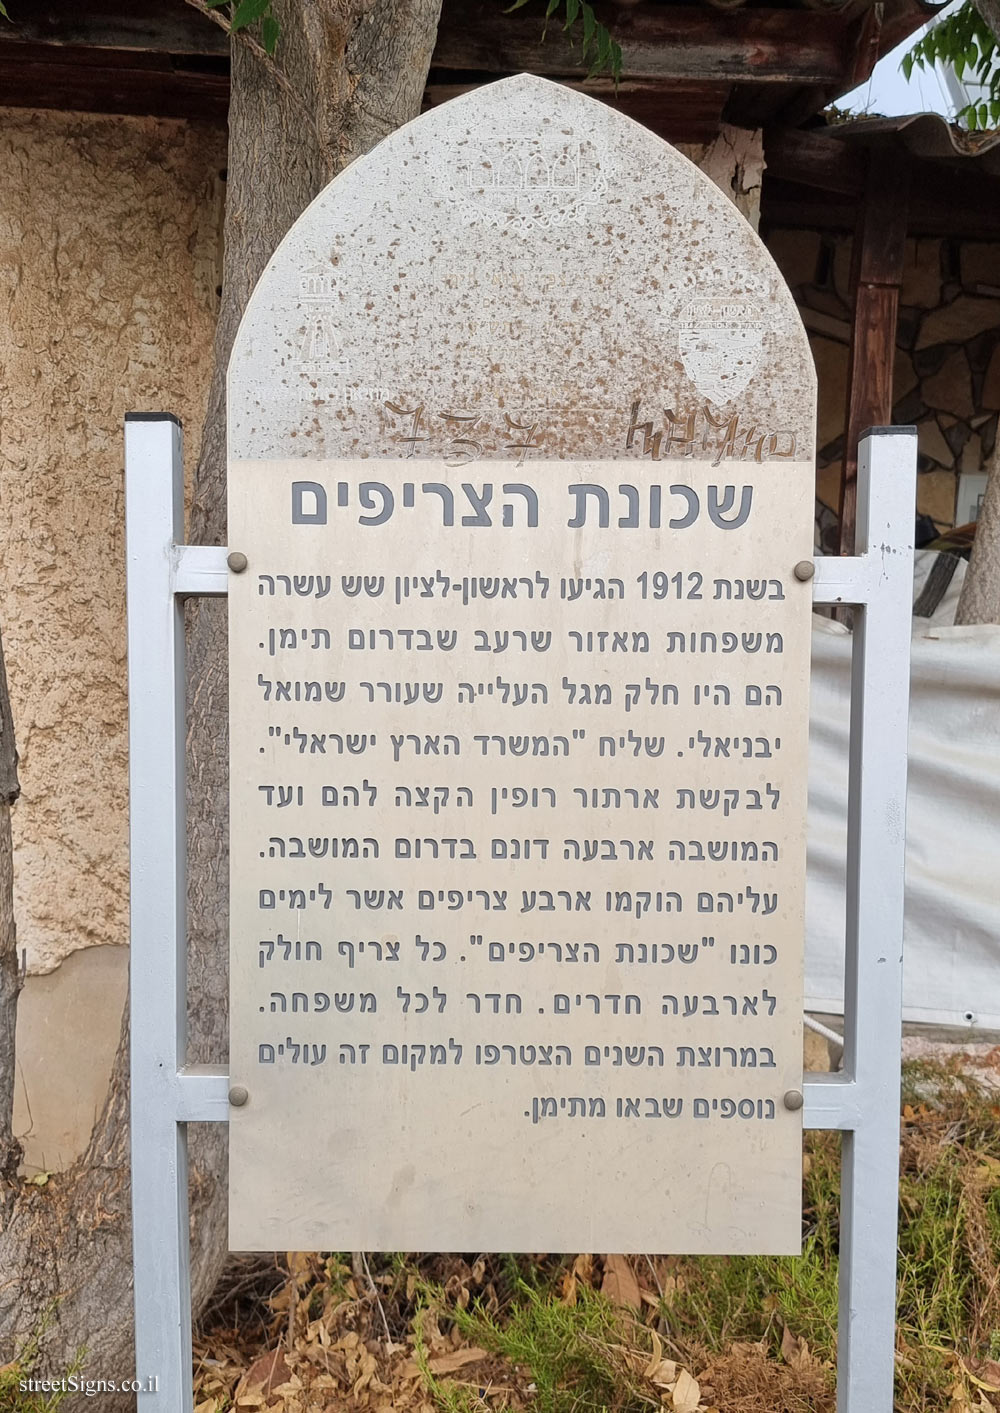 Rishon Lezion - Shivat Zion neighborhood - The barracks neighborhood